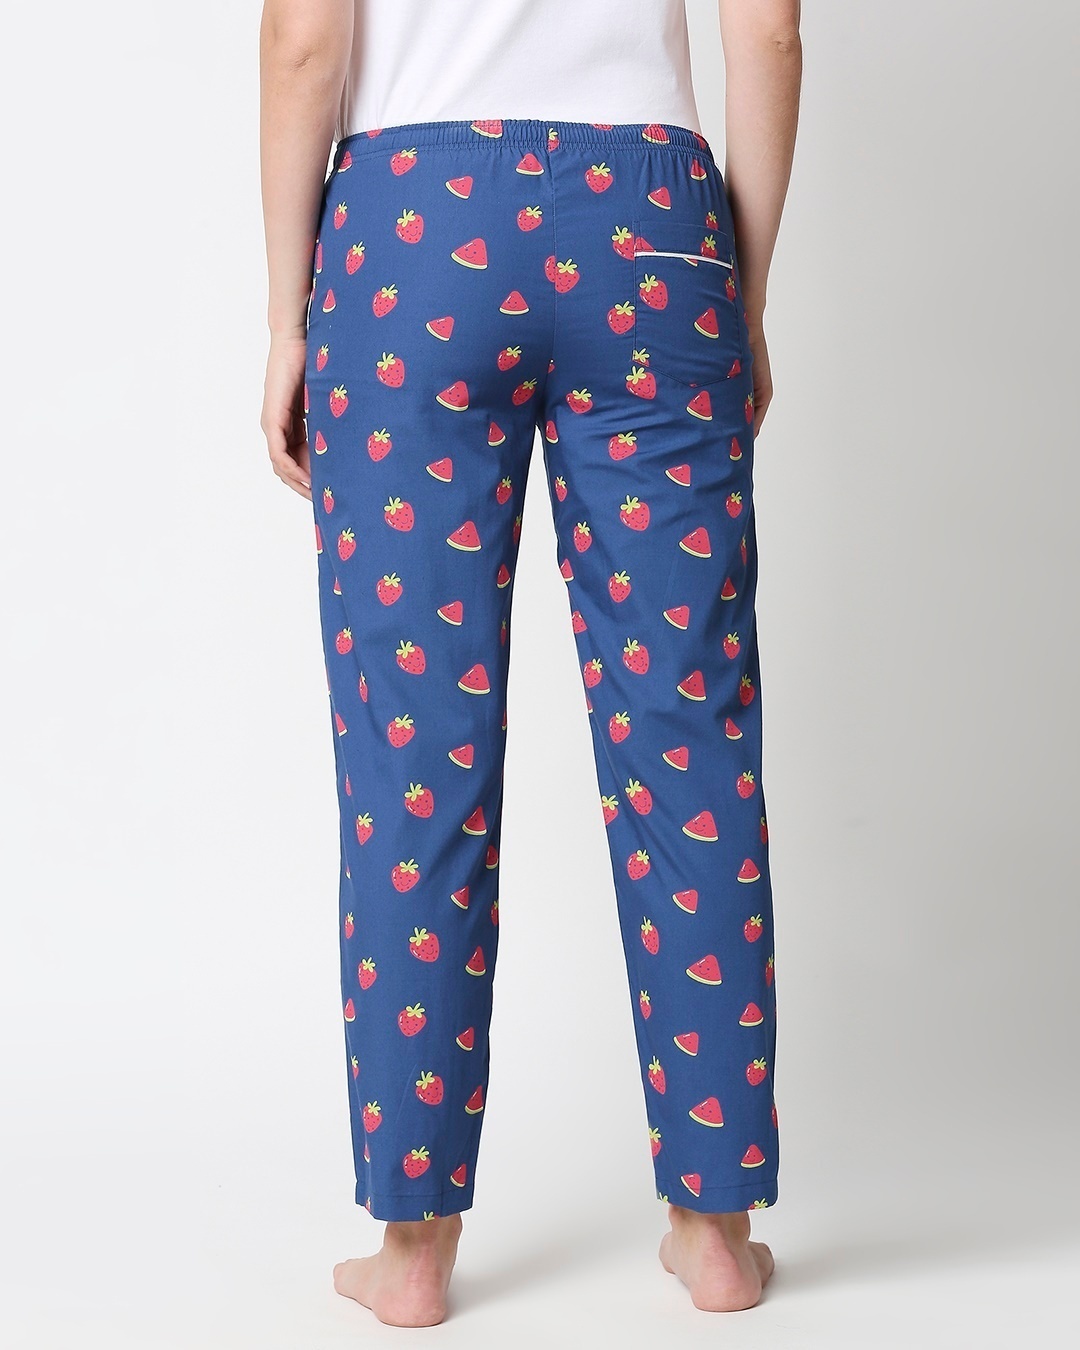 Shop Melon & Berries All Over Printed Pyjama-Full